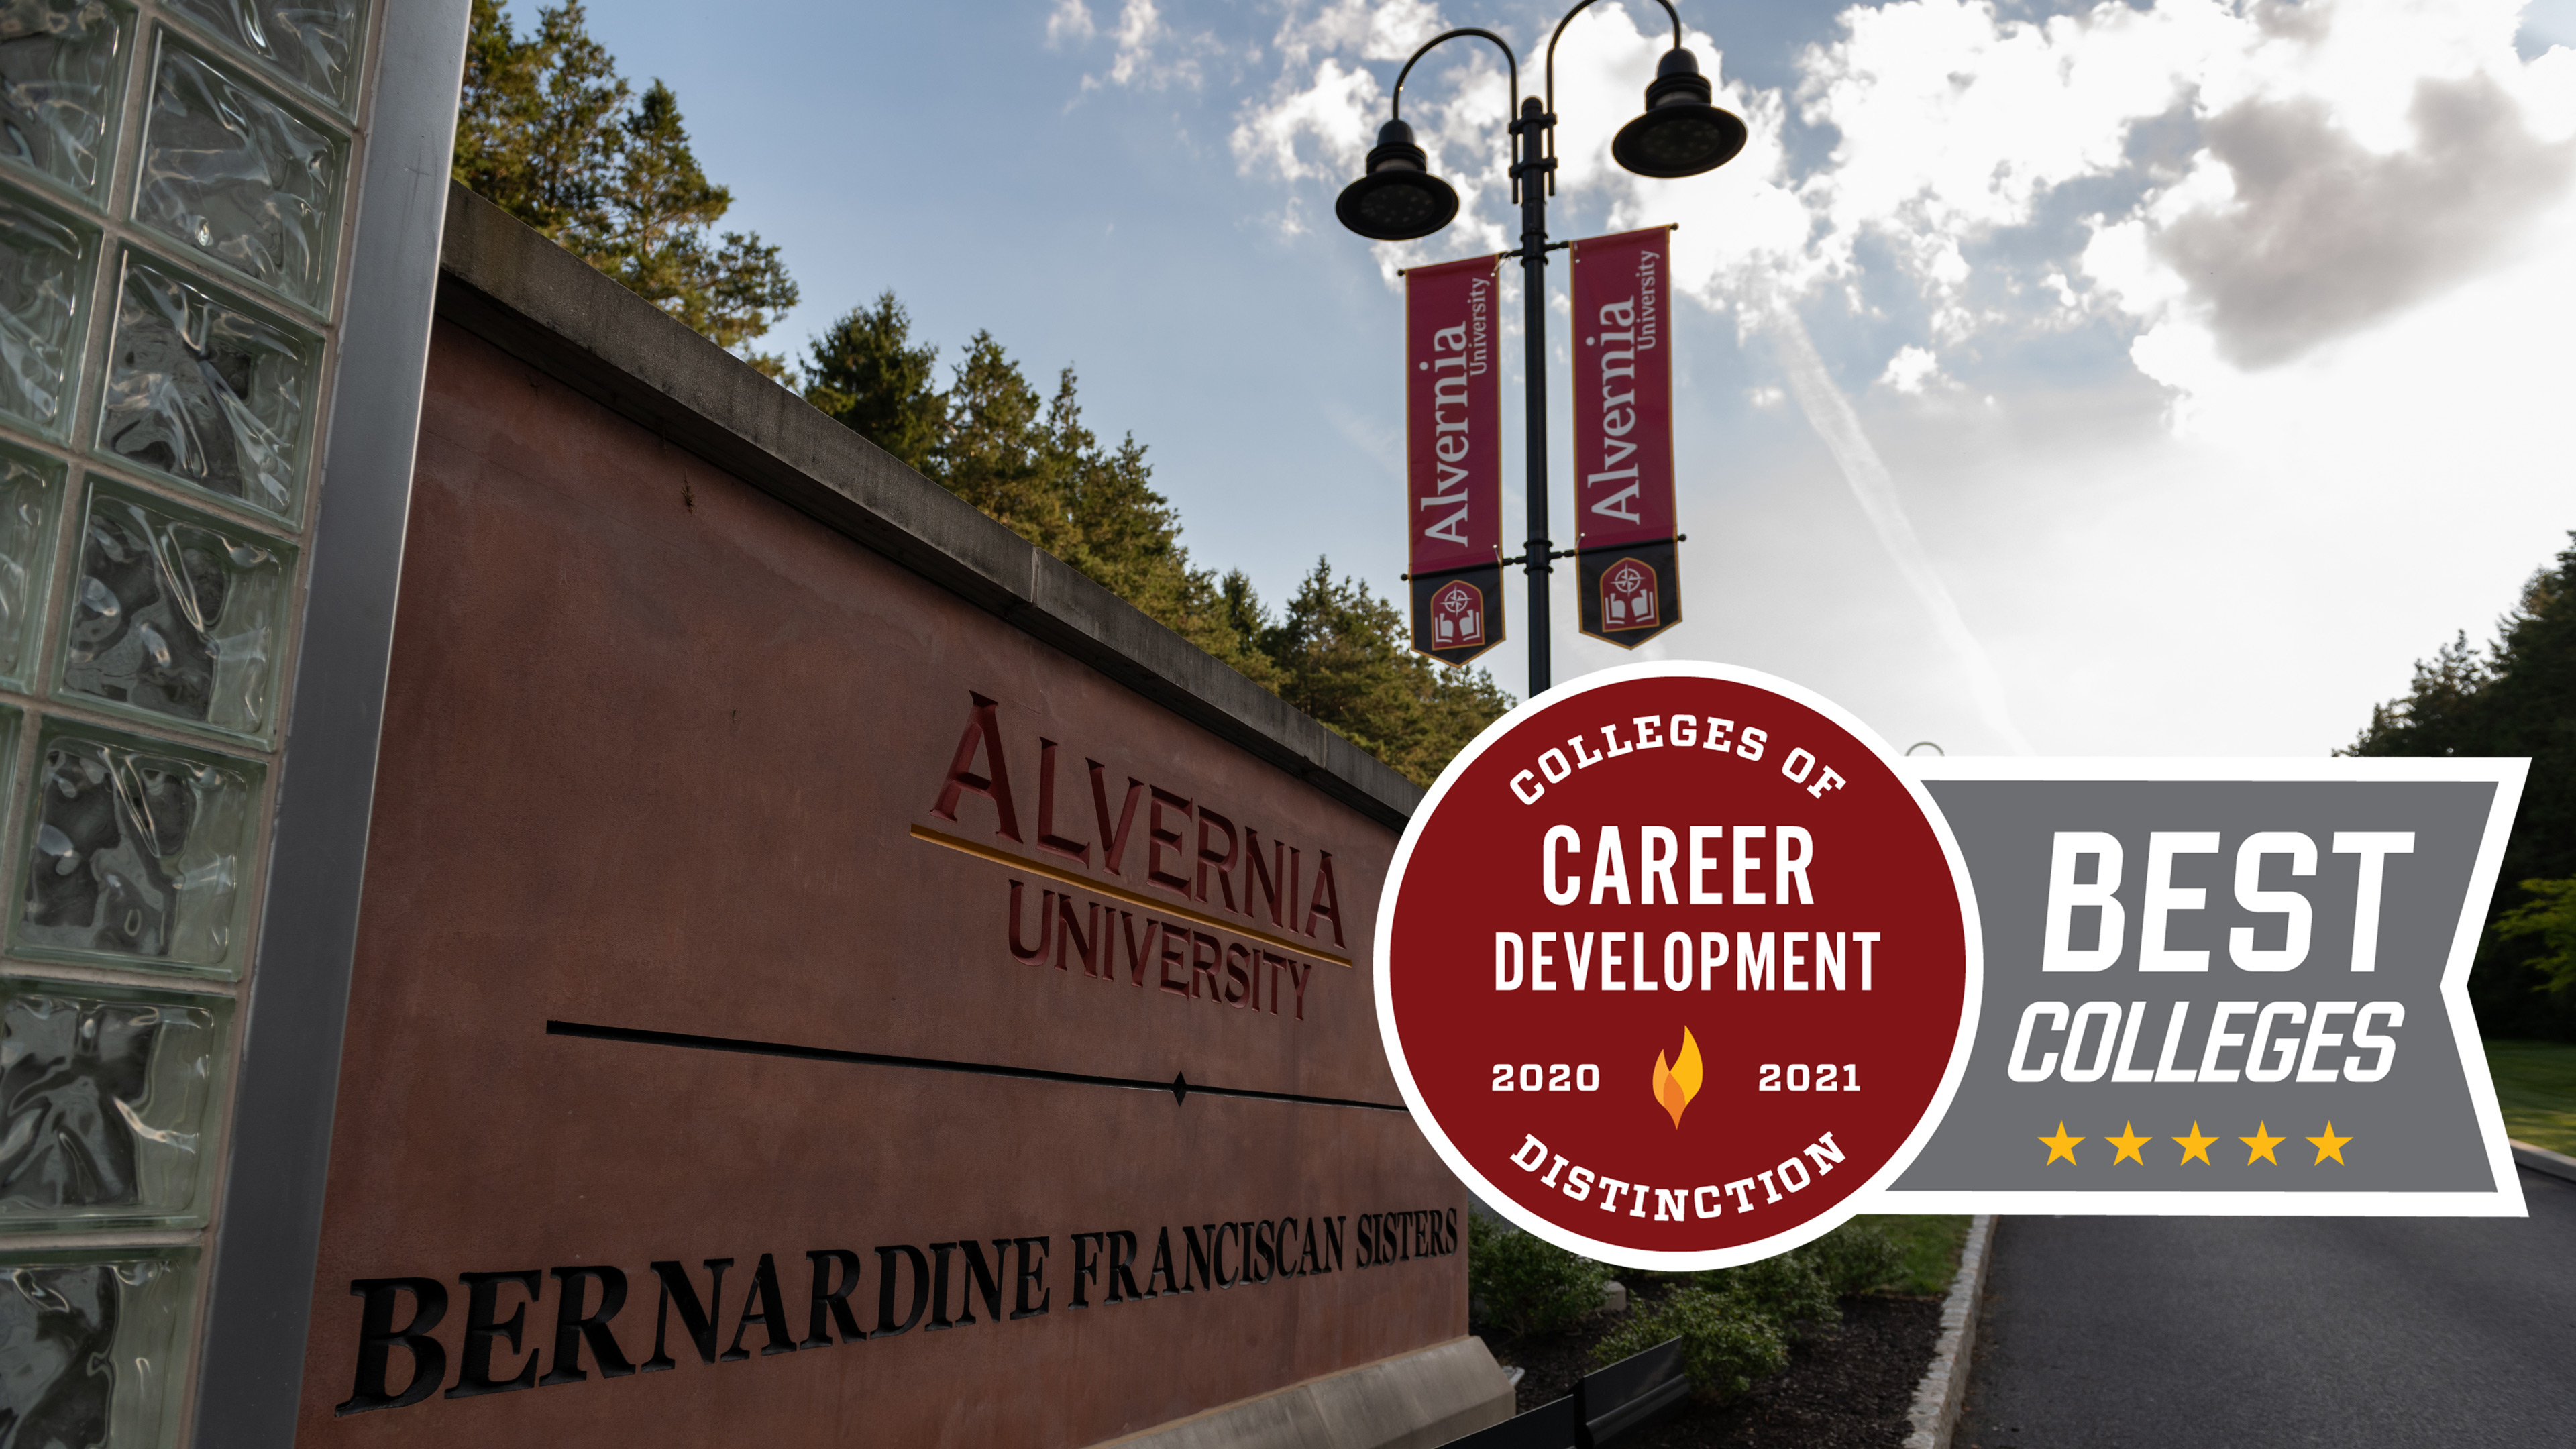 Alvernia University Colleges of Distinction Award for Career Development